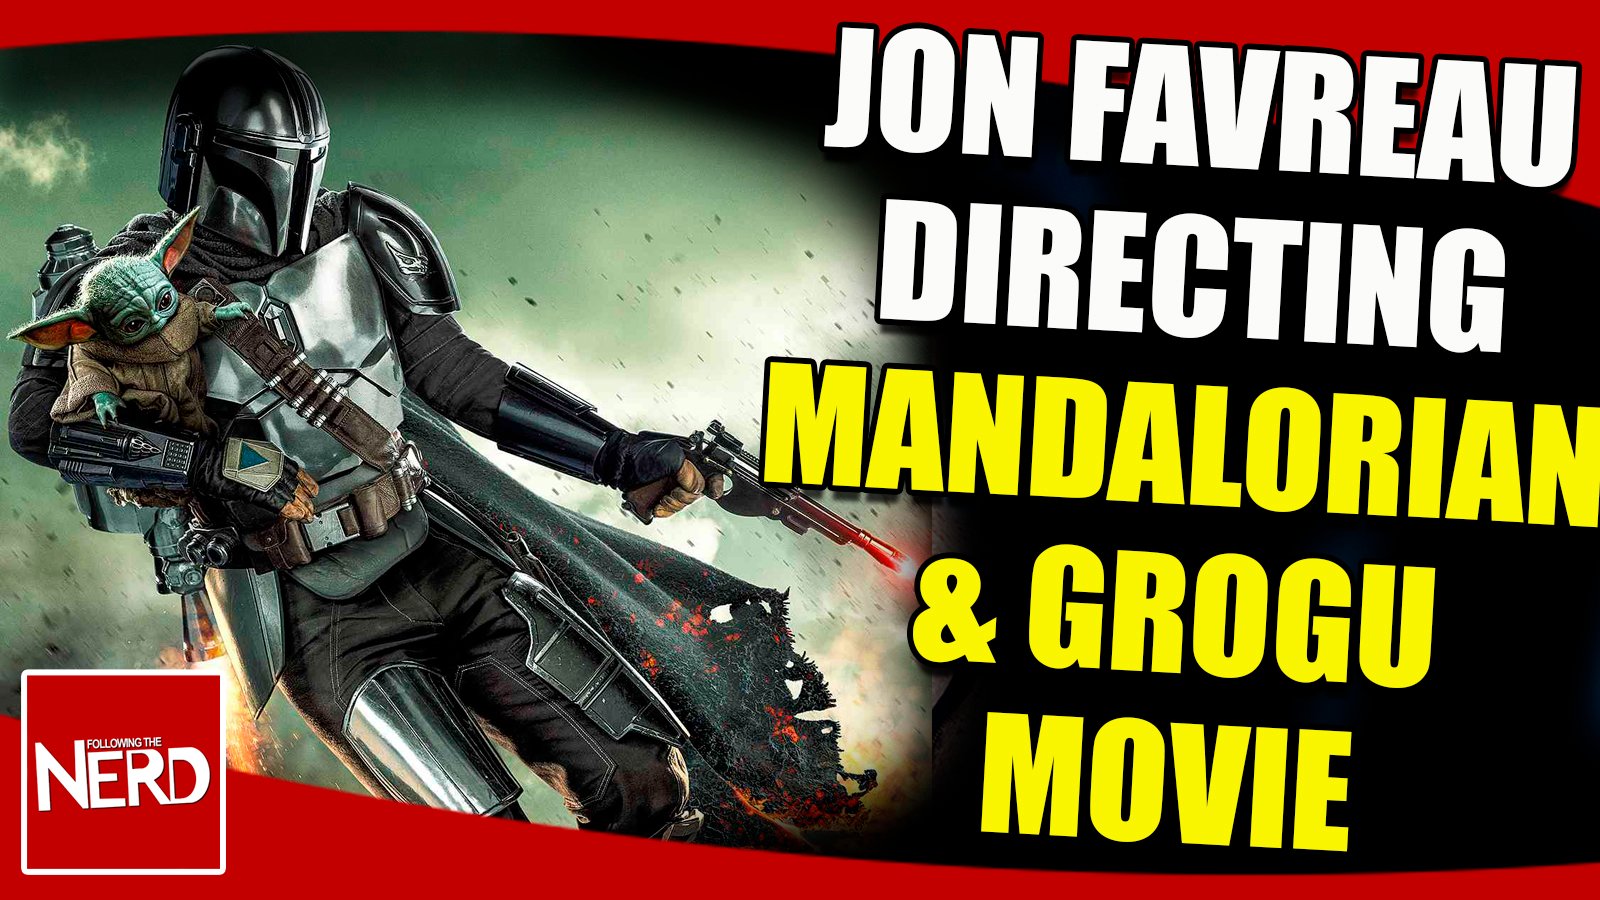 Mandalorian & Grogu' movie begins production this year 